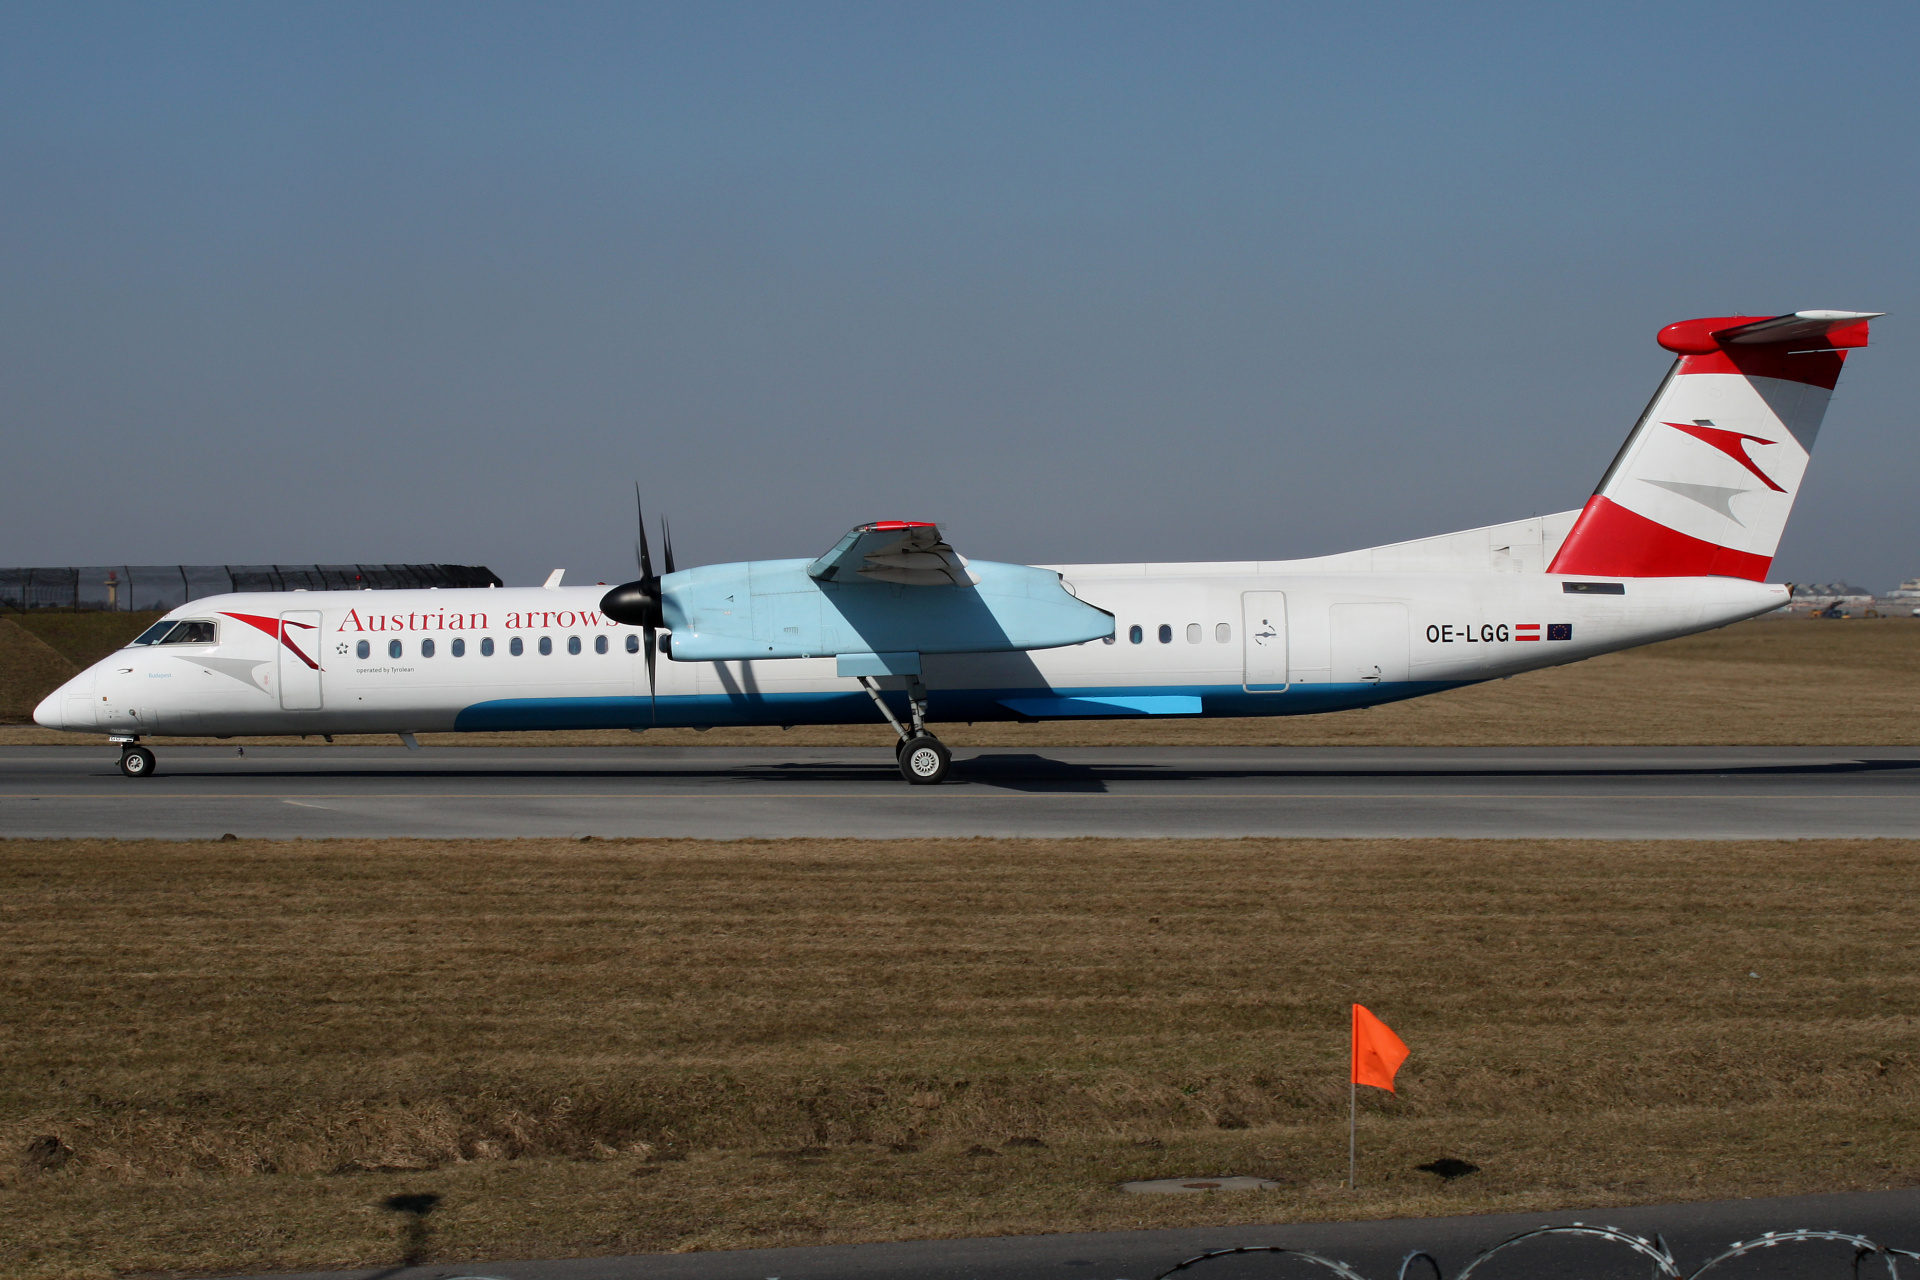 OE-LGG, Austrian arrows (Tyrolean) (Samoloty » Spotting na EPWA » De Havilland Canada DHC-8 Dash 8 » Austrian Airlines)